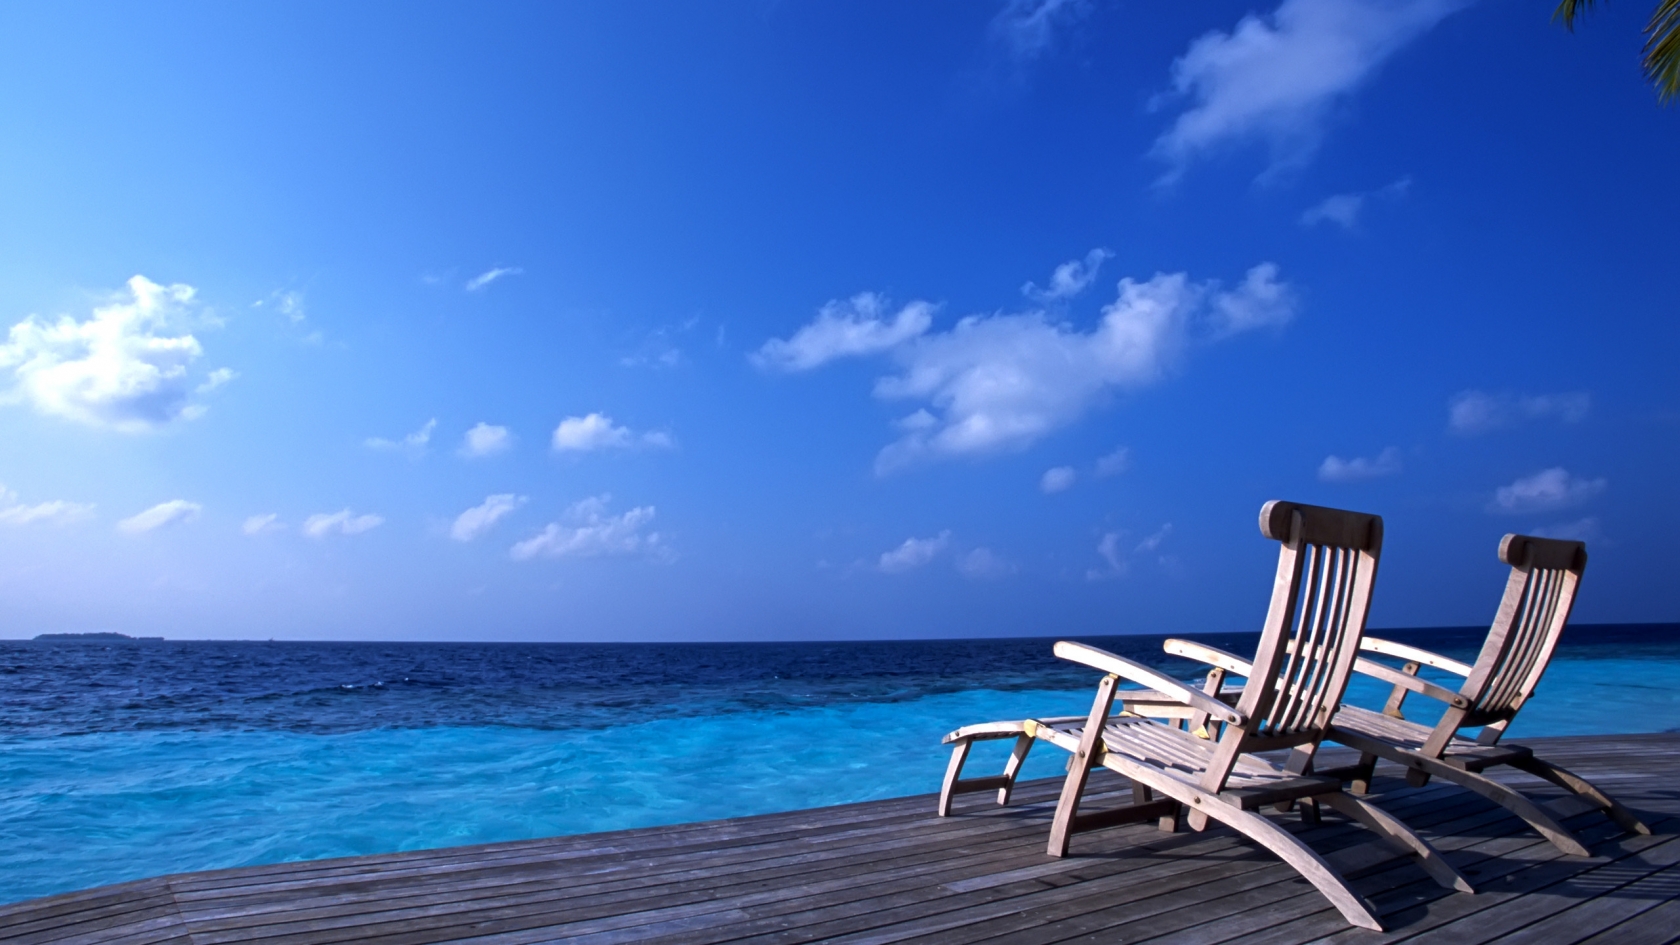 Maldives Beach for 1680 x 945 HDTV resolution